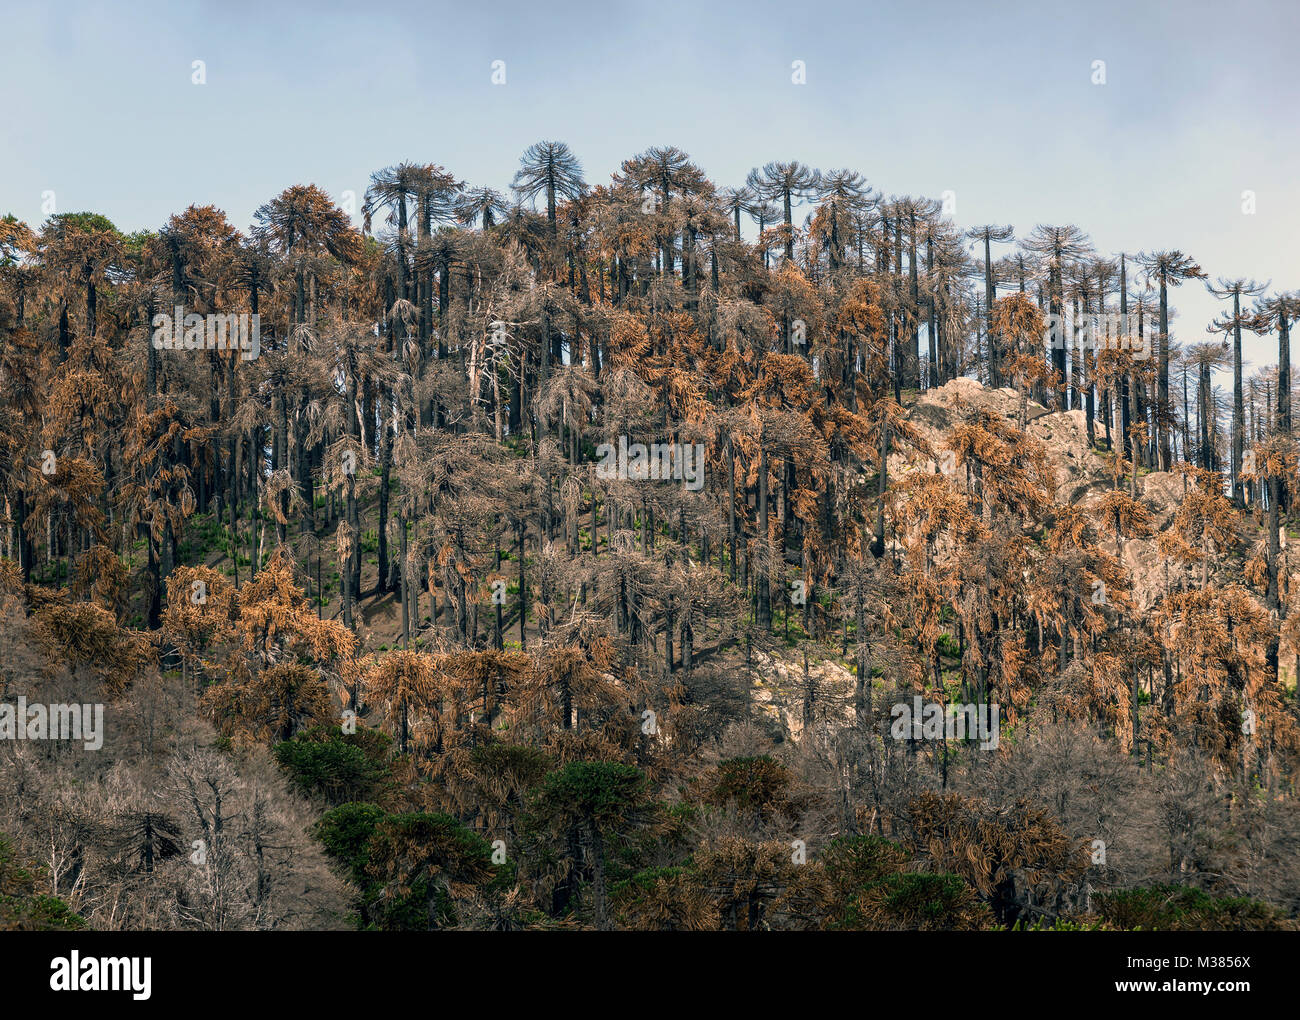 Reserva Nacional China Muerta, Chile. / Reserva Natural China muerta. Se cumplen 3 años desde la tragedia de China muerta en la región de la Araucanía. Foto de stock